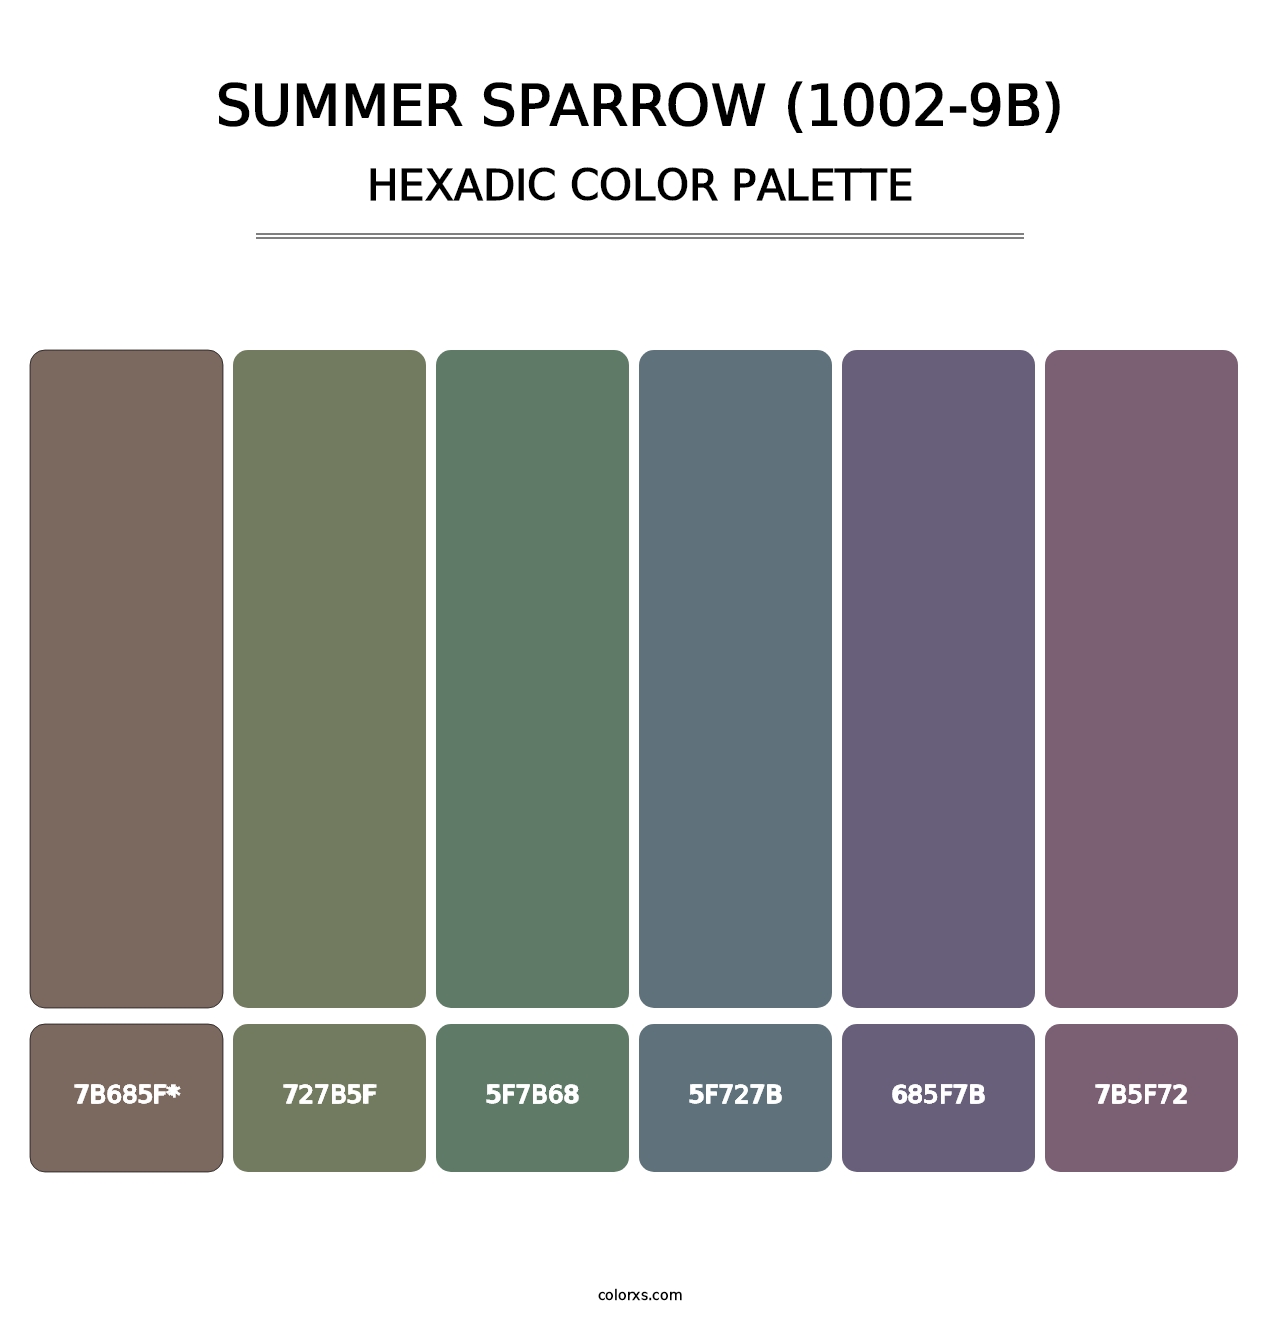 Summer Sparrow (1002-9B) - Hexadic Color Palette